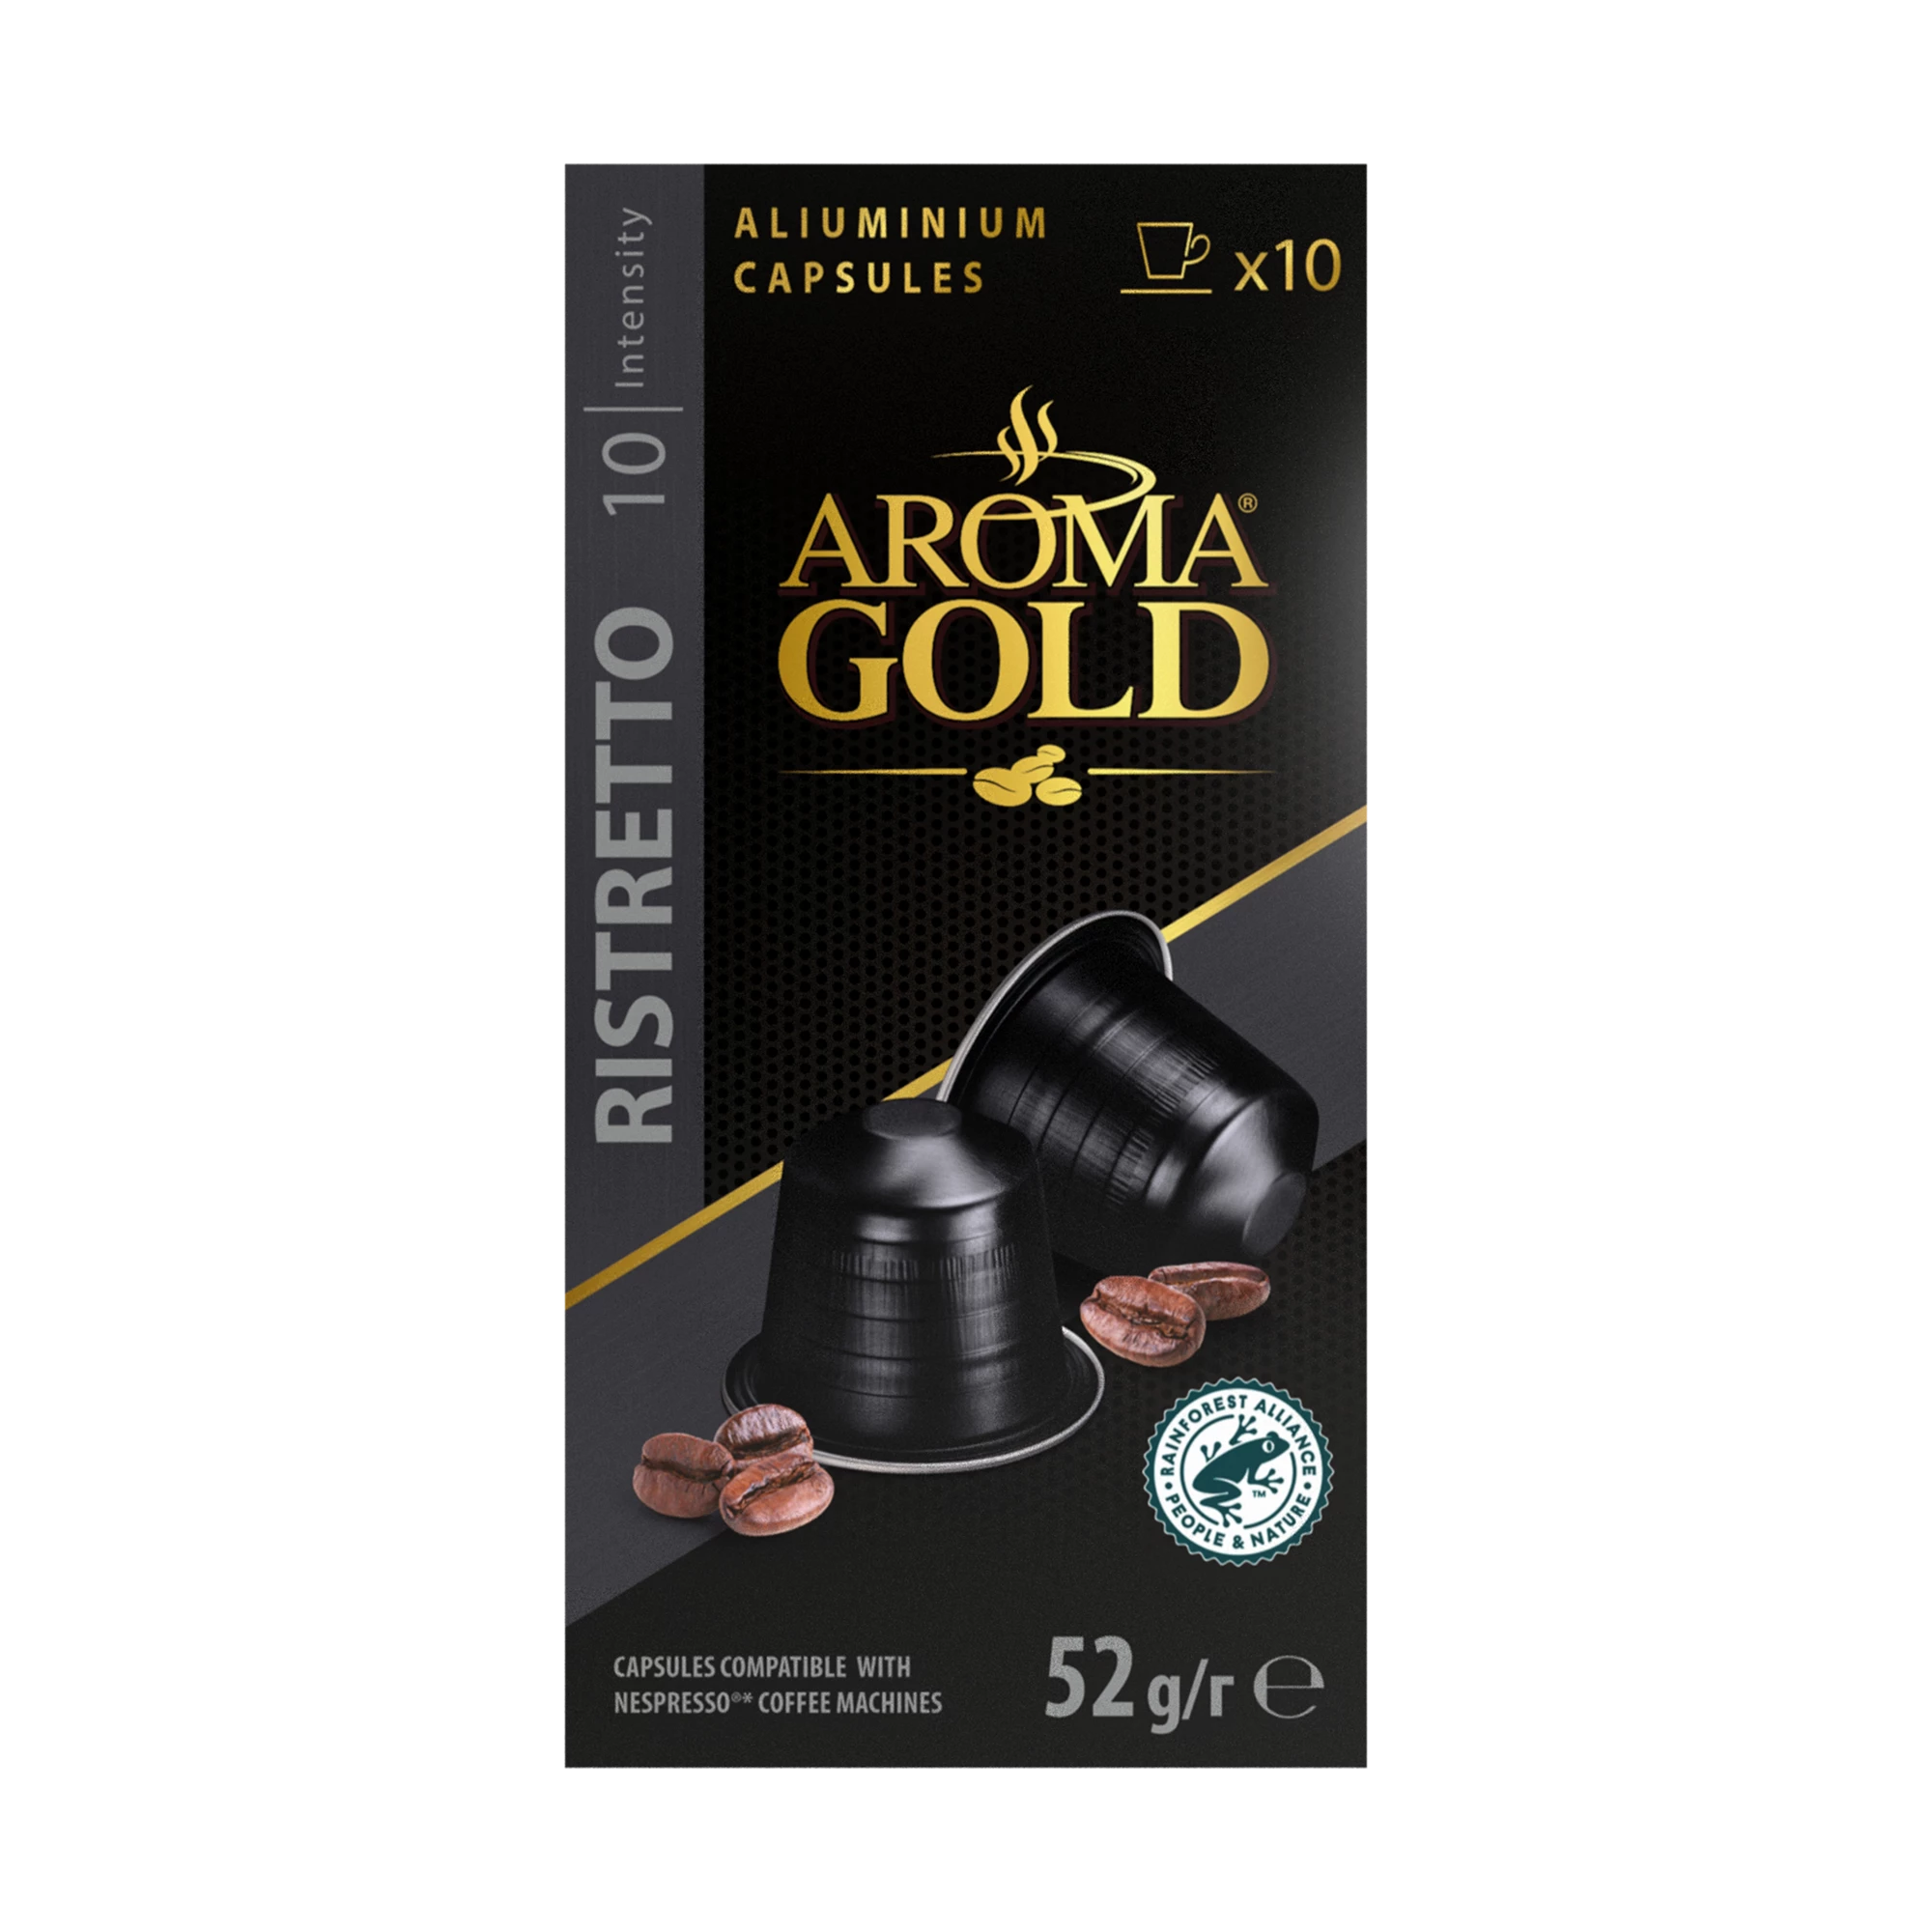 Café Ristretto Tương thích Nespresso X 10. (cường độ 10) - Aroma Gold